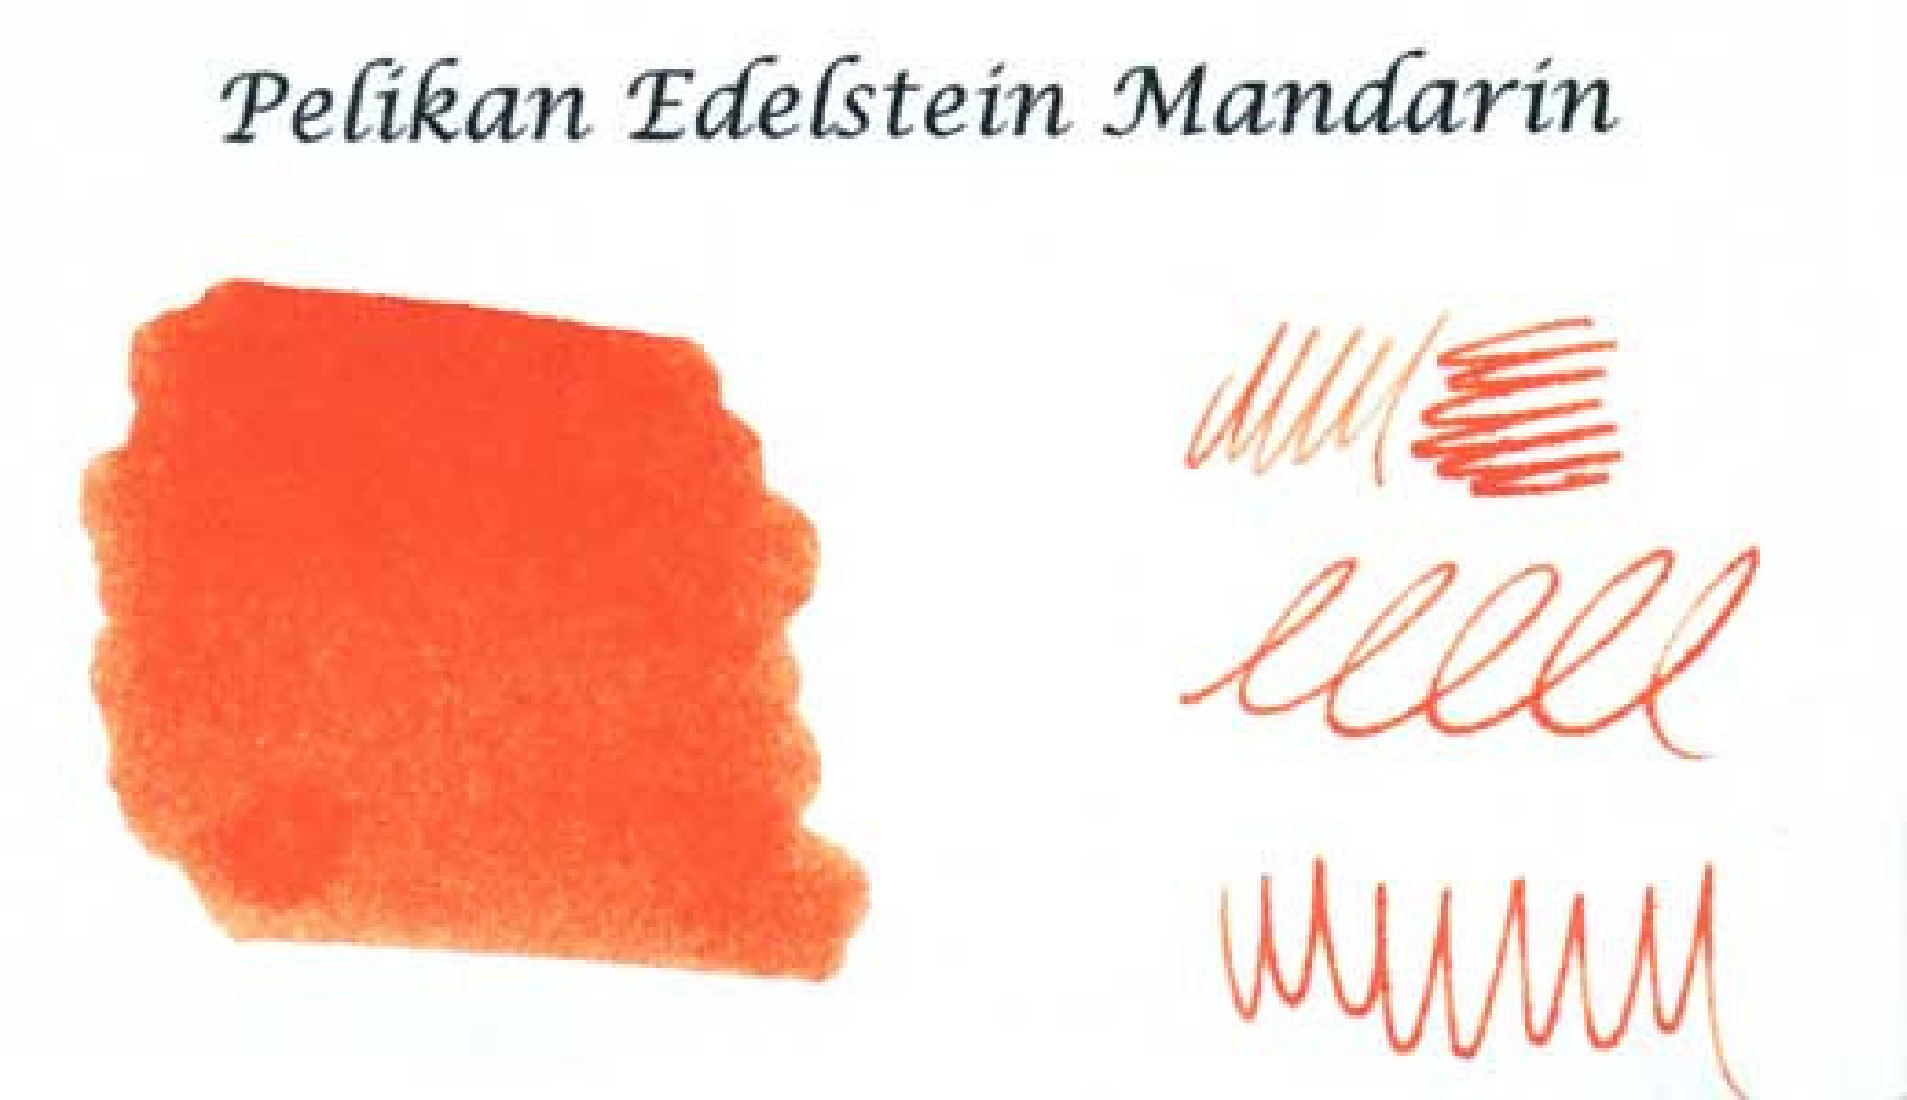 INK  Ν339341 50ML MANDARIN EDELSTEIN PELIKAN